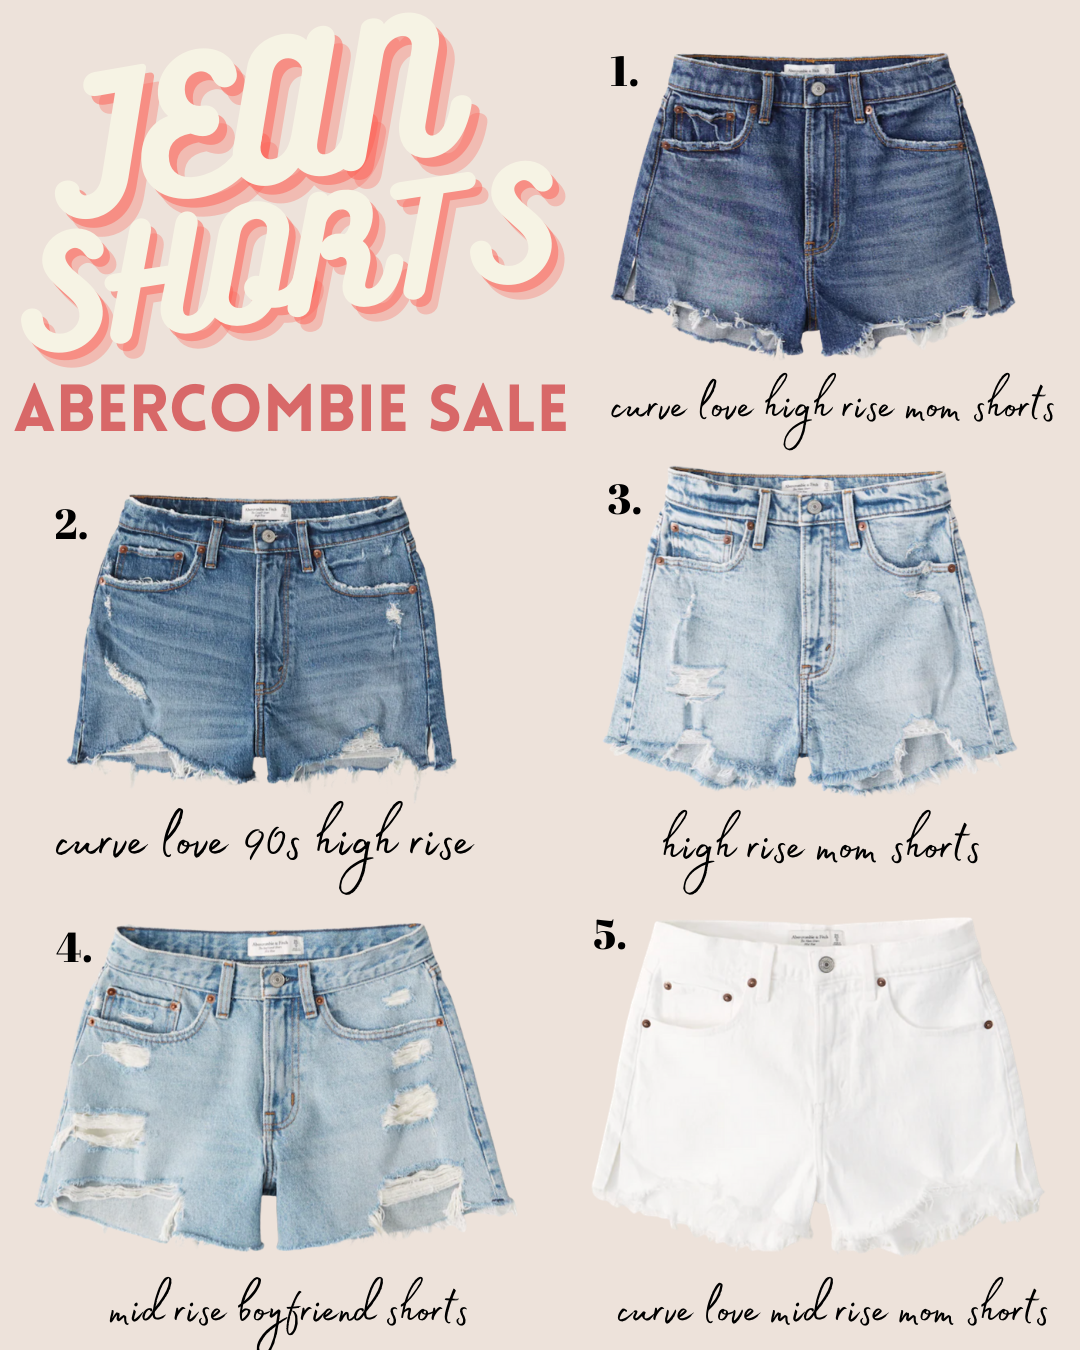 abercrombie denim shorts on sale